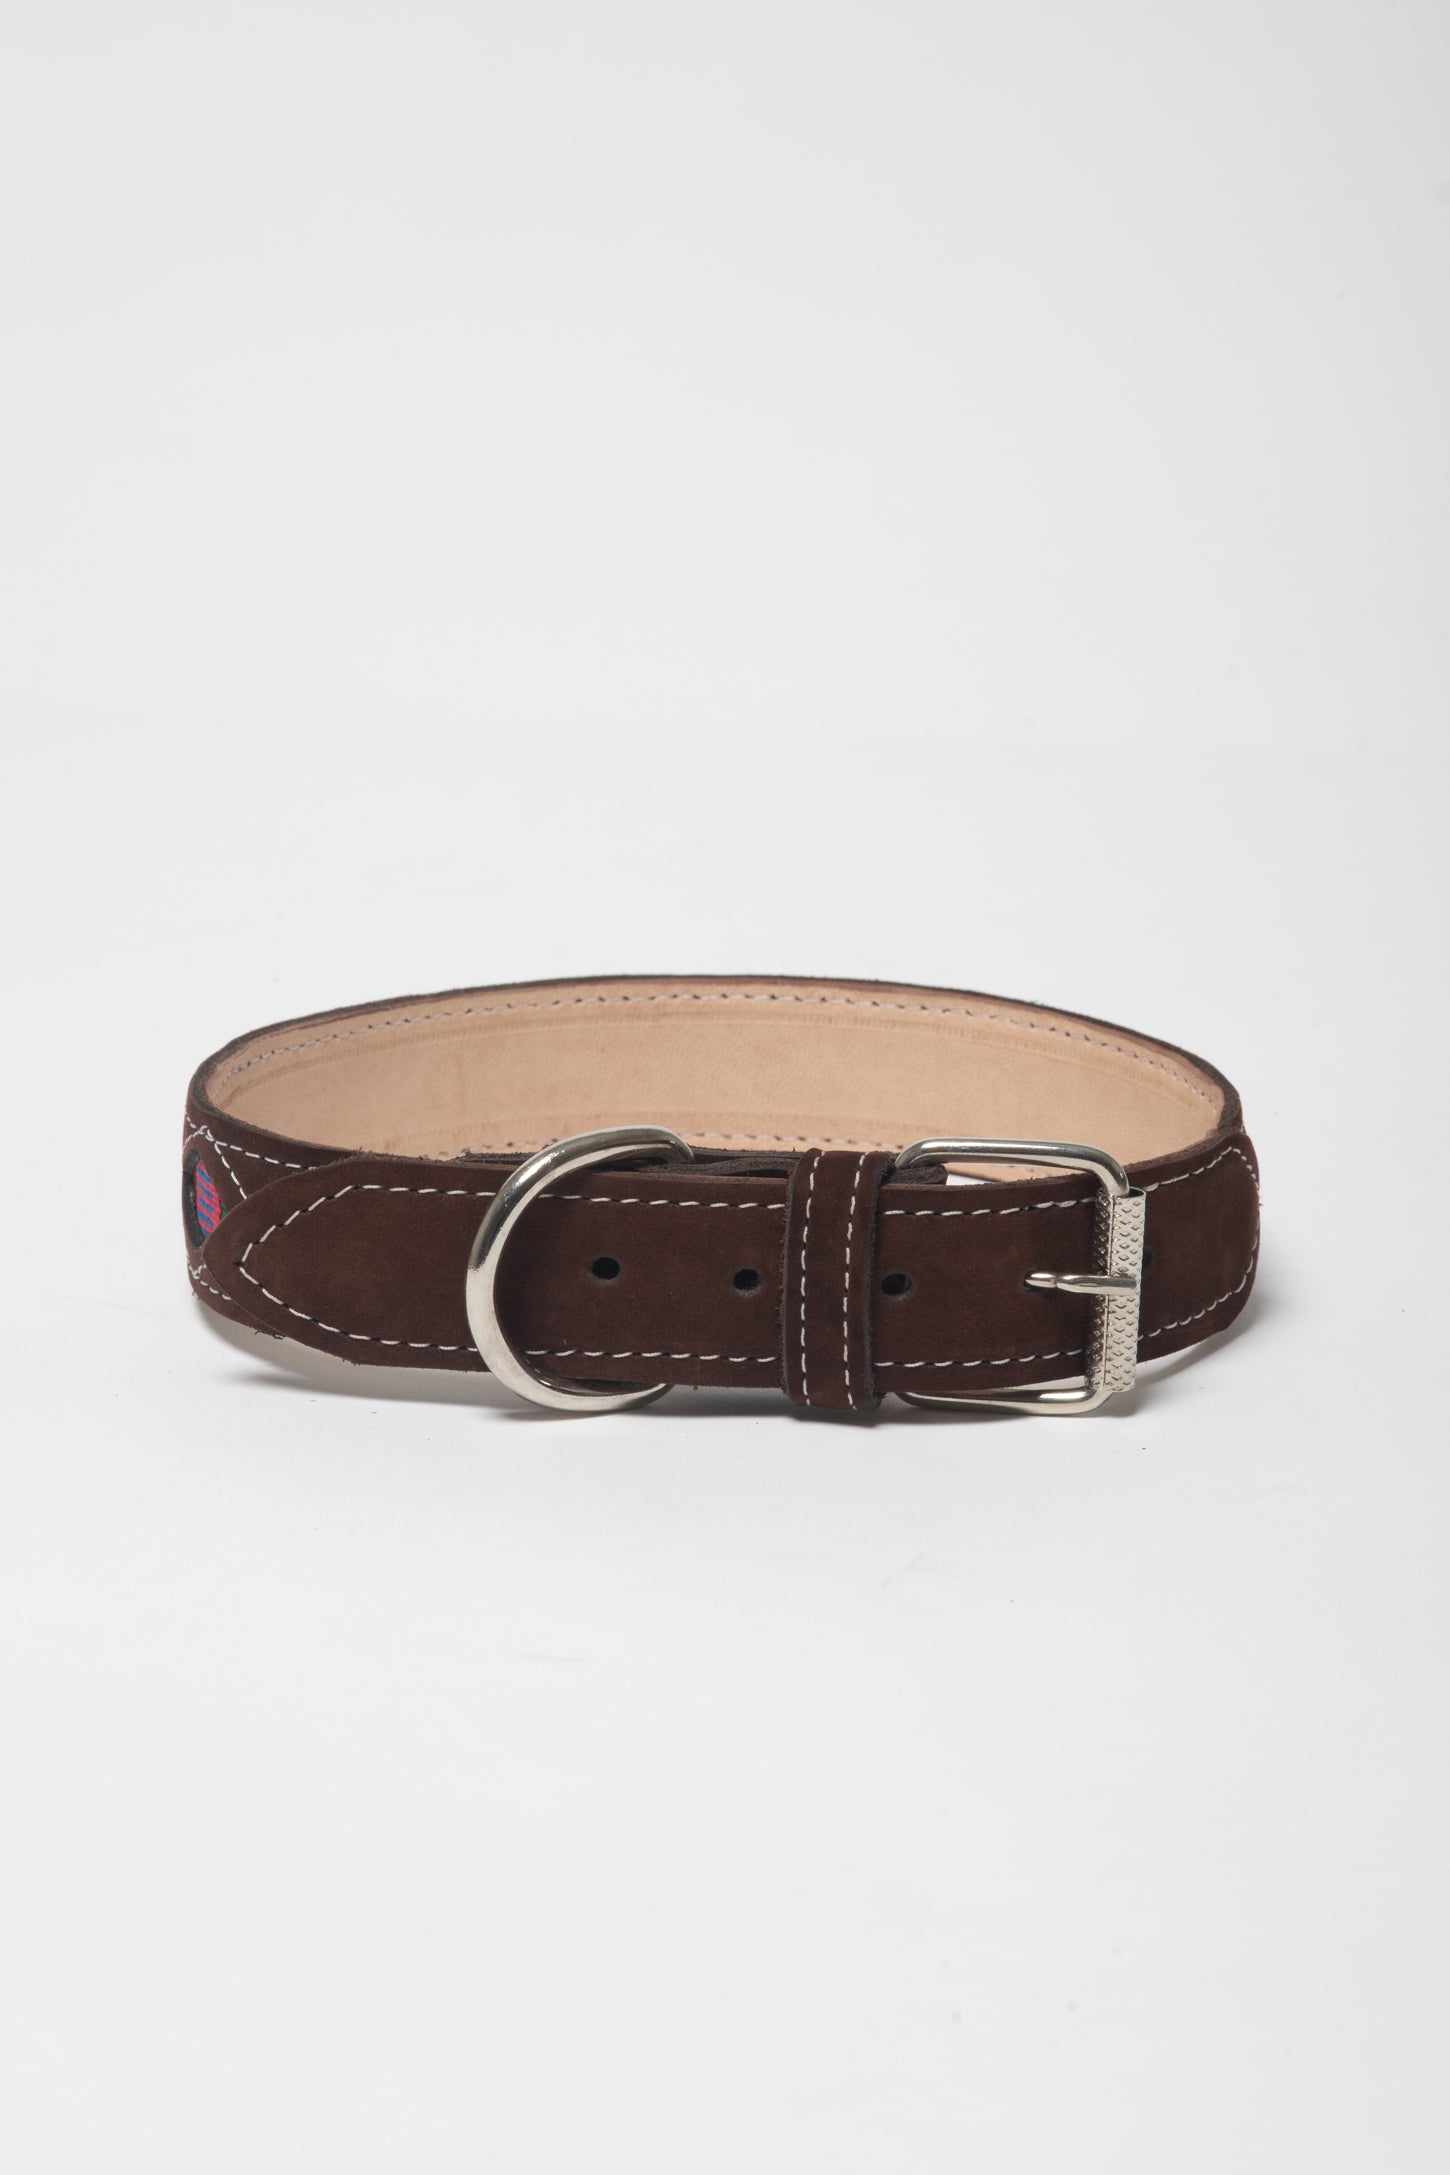 Ventana Handmade Leather Dog Collar